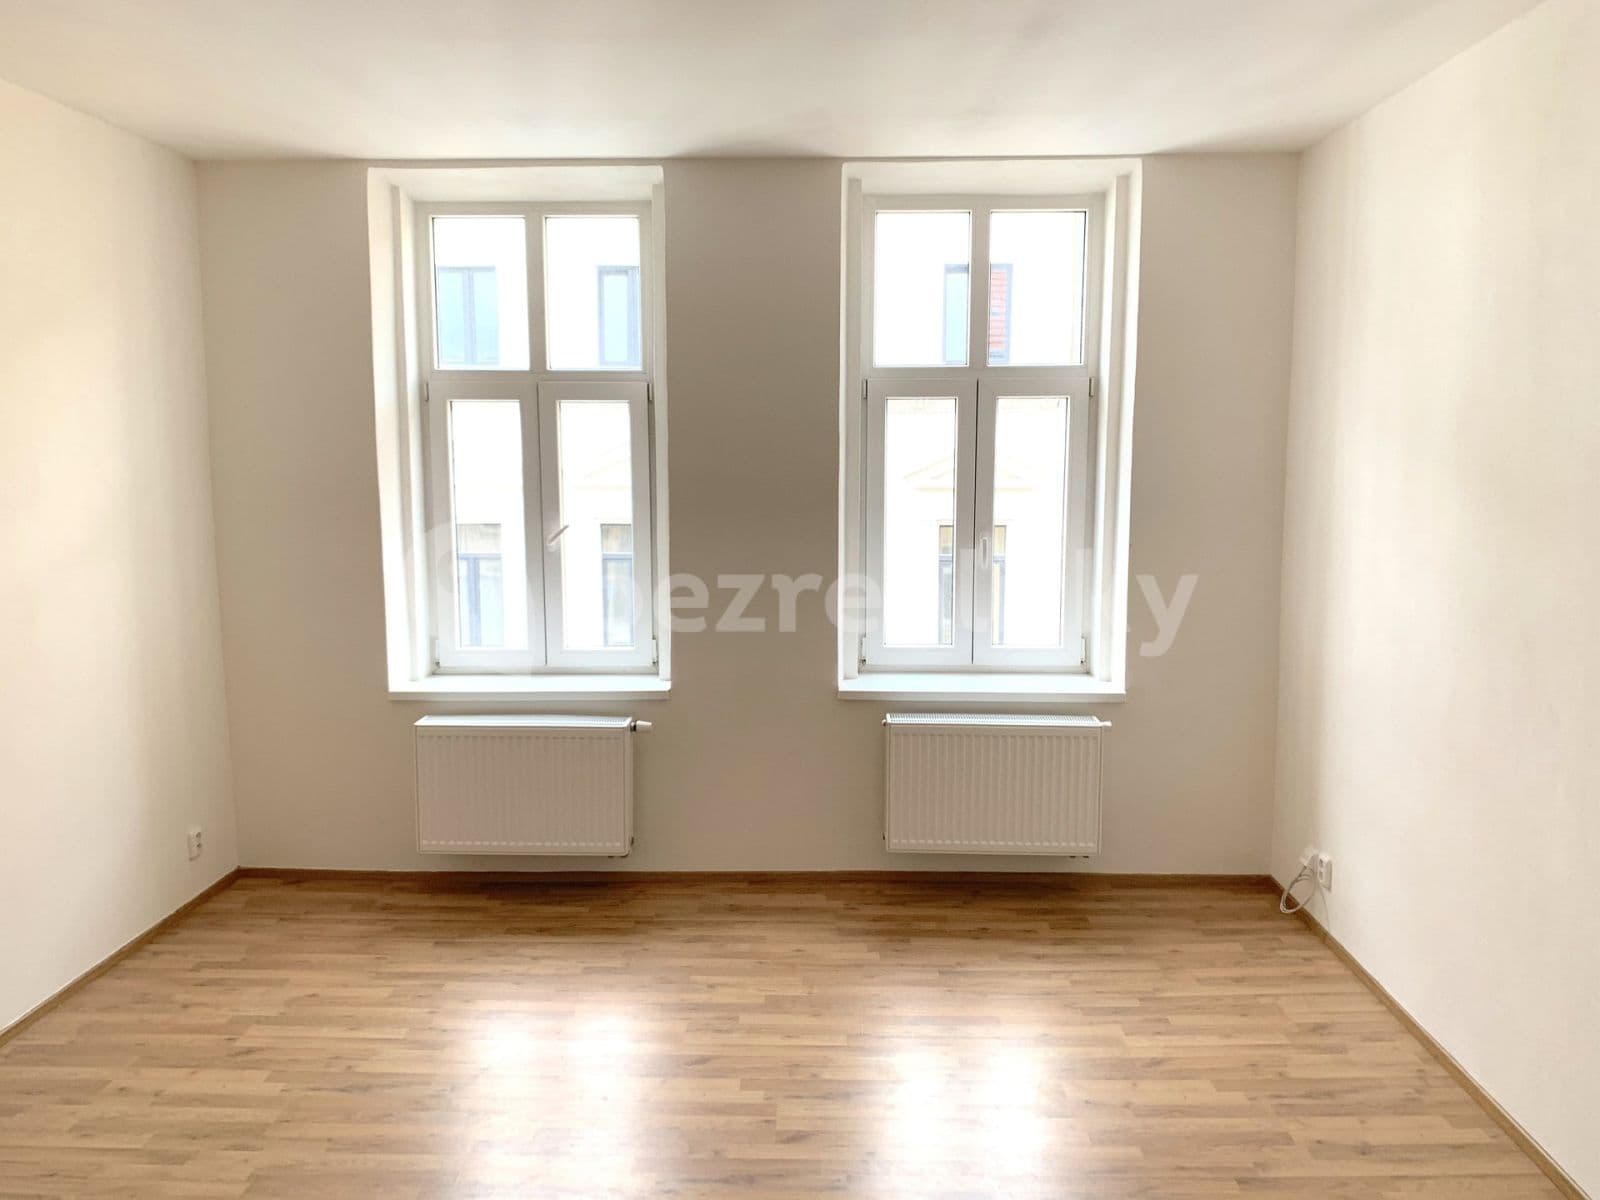 2 bedroom flat to rent, 52 m², Vlhká, Brno, Jihomoravský Region